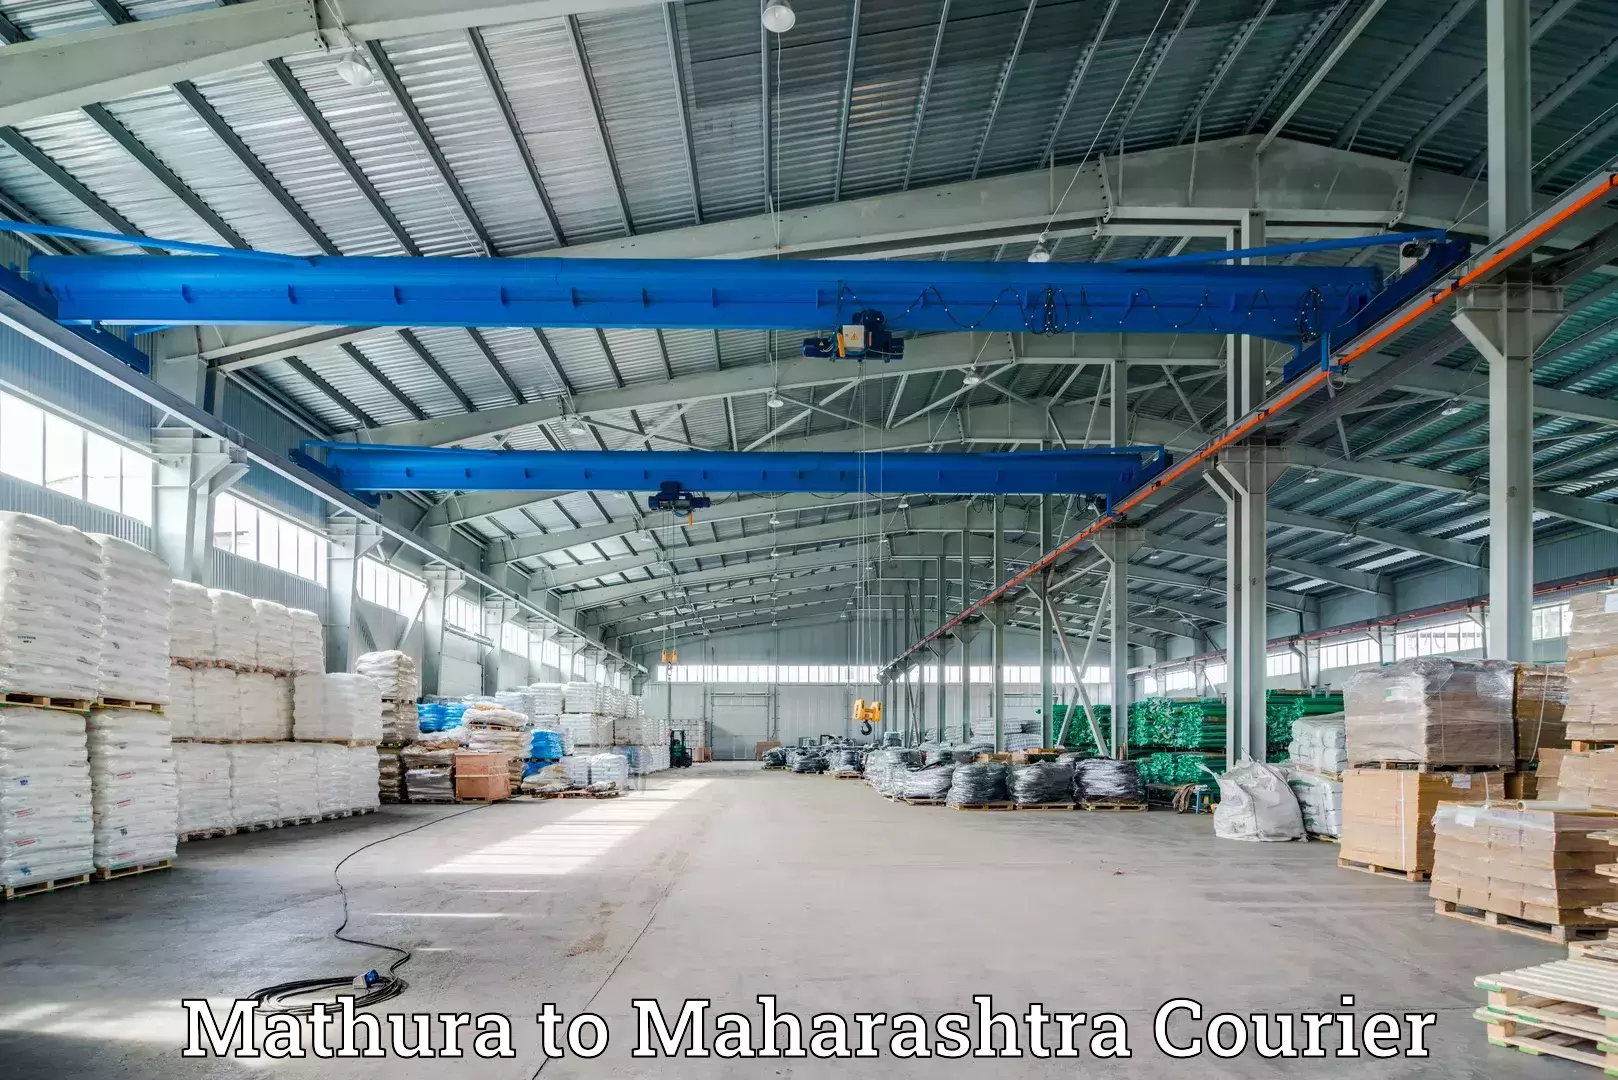 Nationwide shipping capabilities Mathura to Newasa